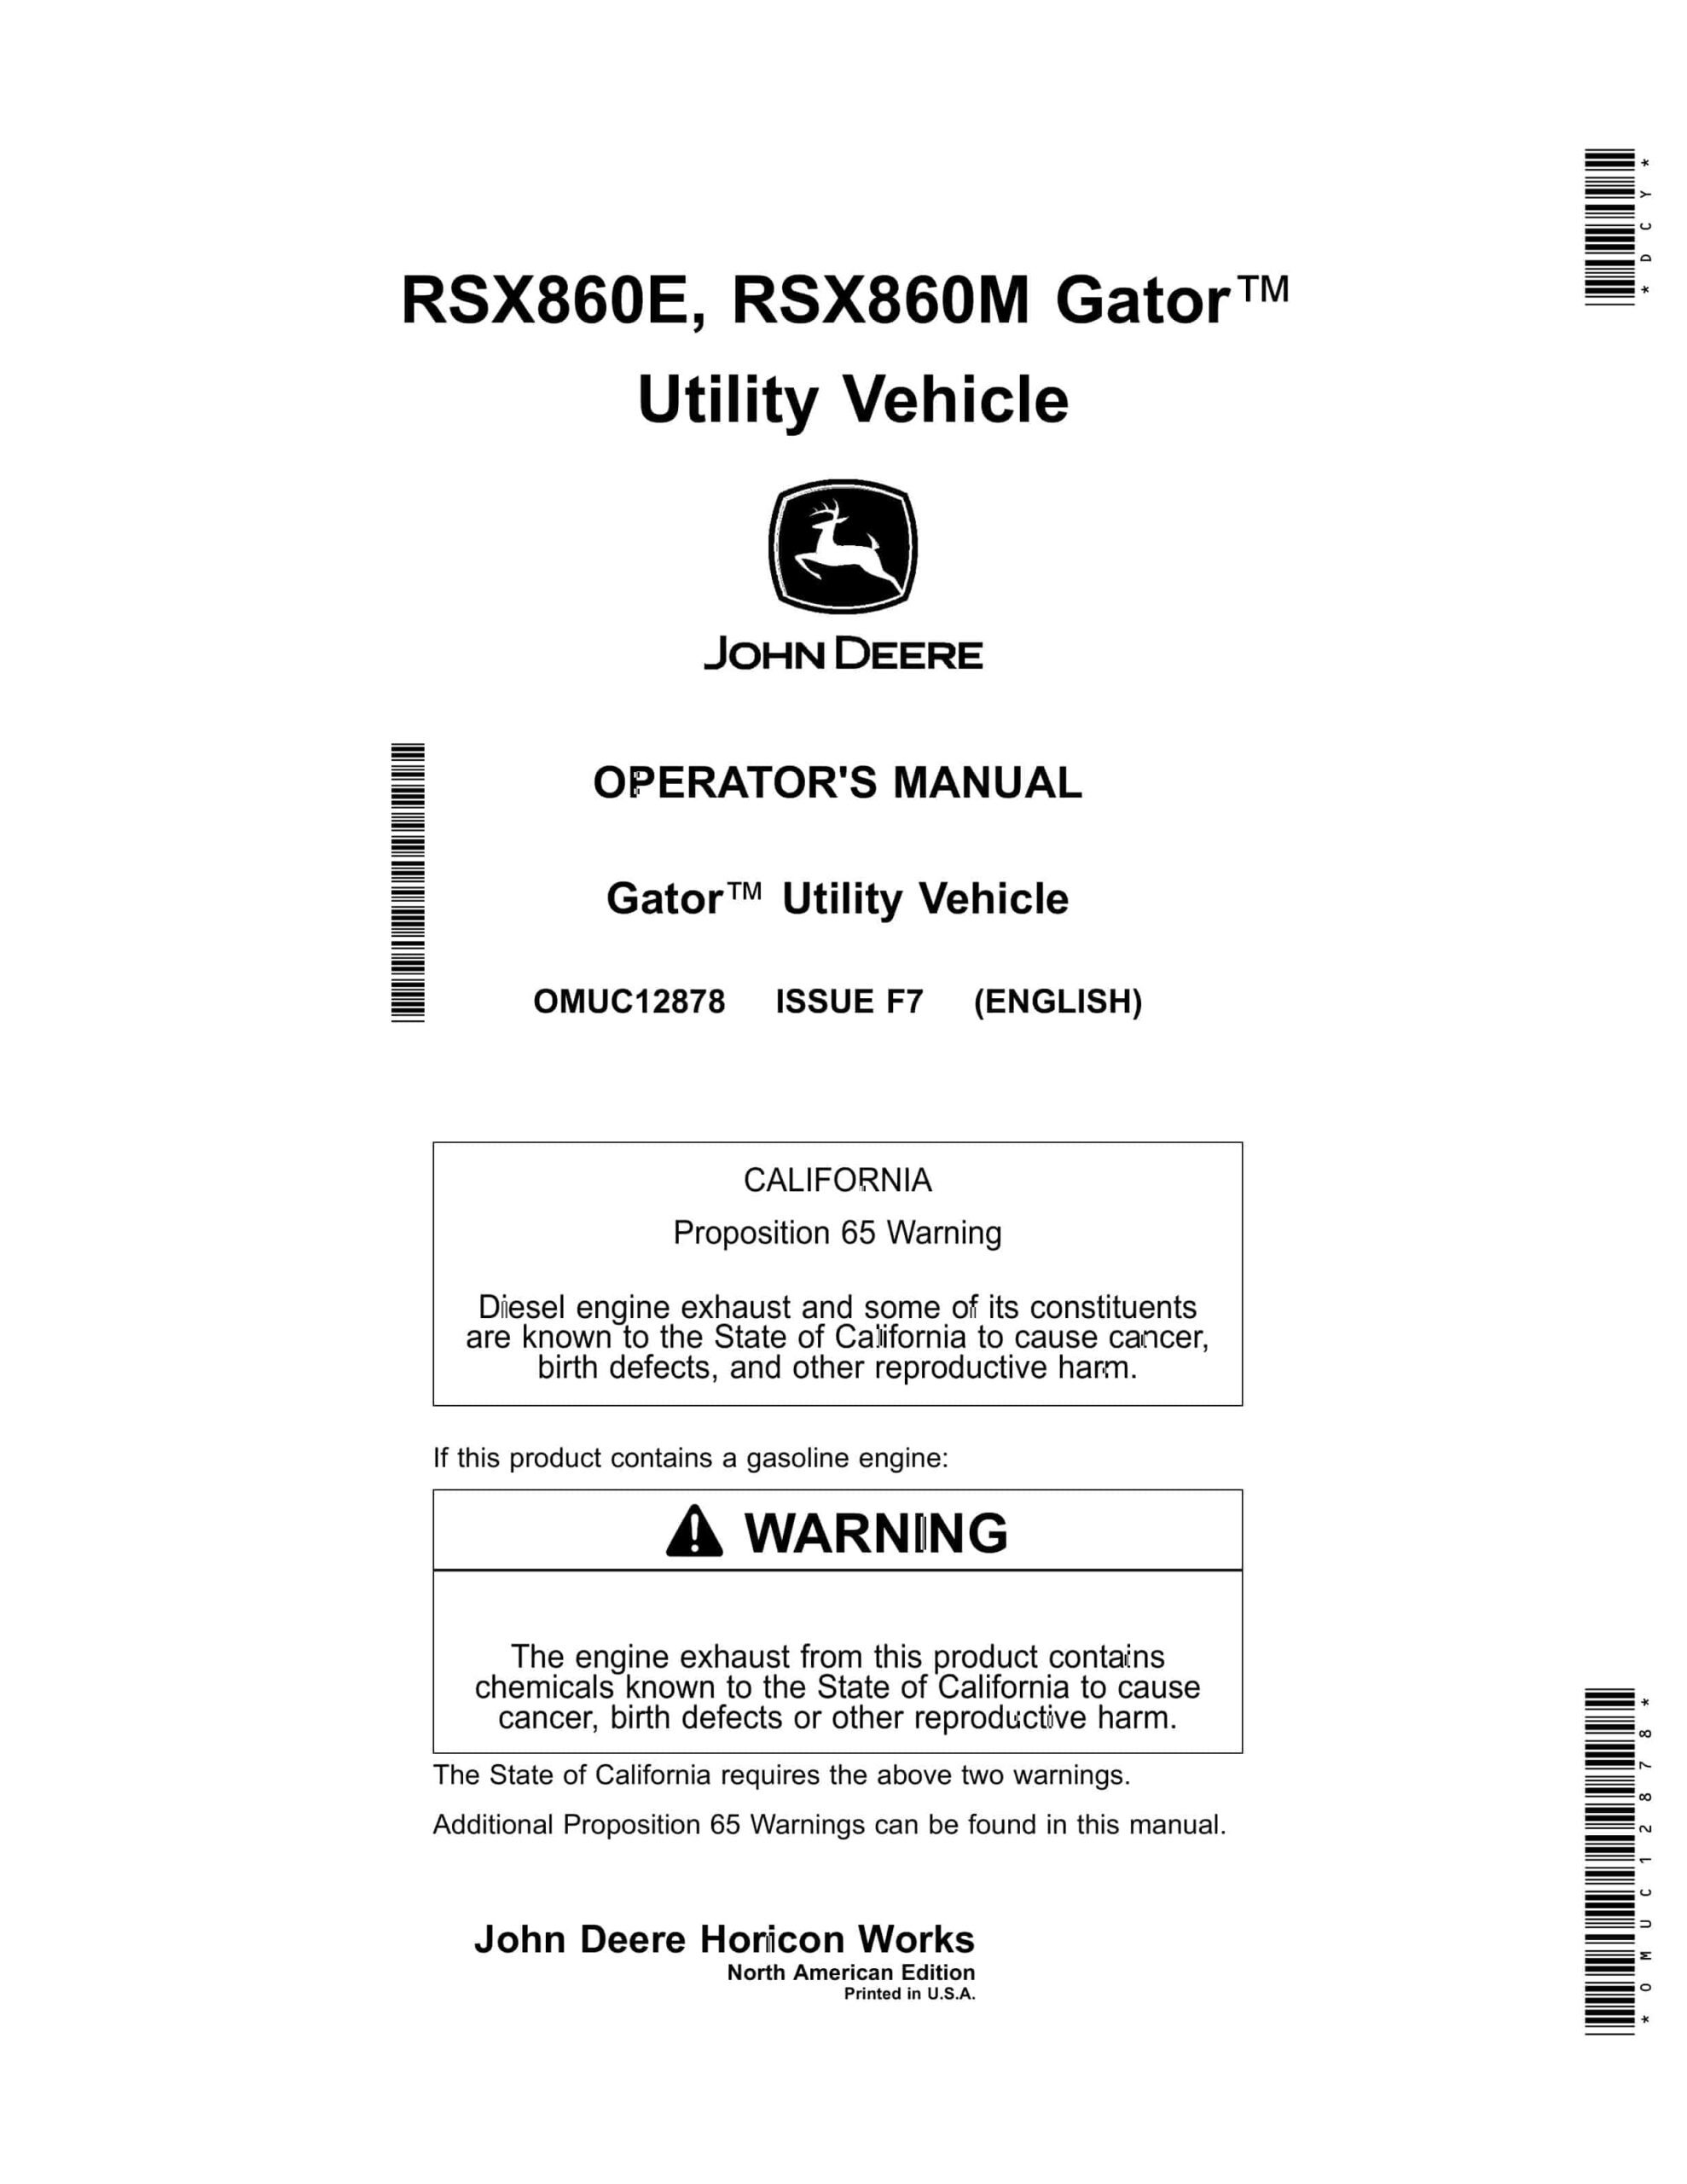 John Deere RSX860E, RSX860M Gator Utility Vehicles Operator Manual OMUC12878-1